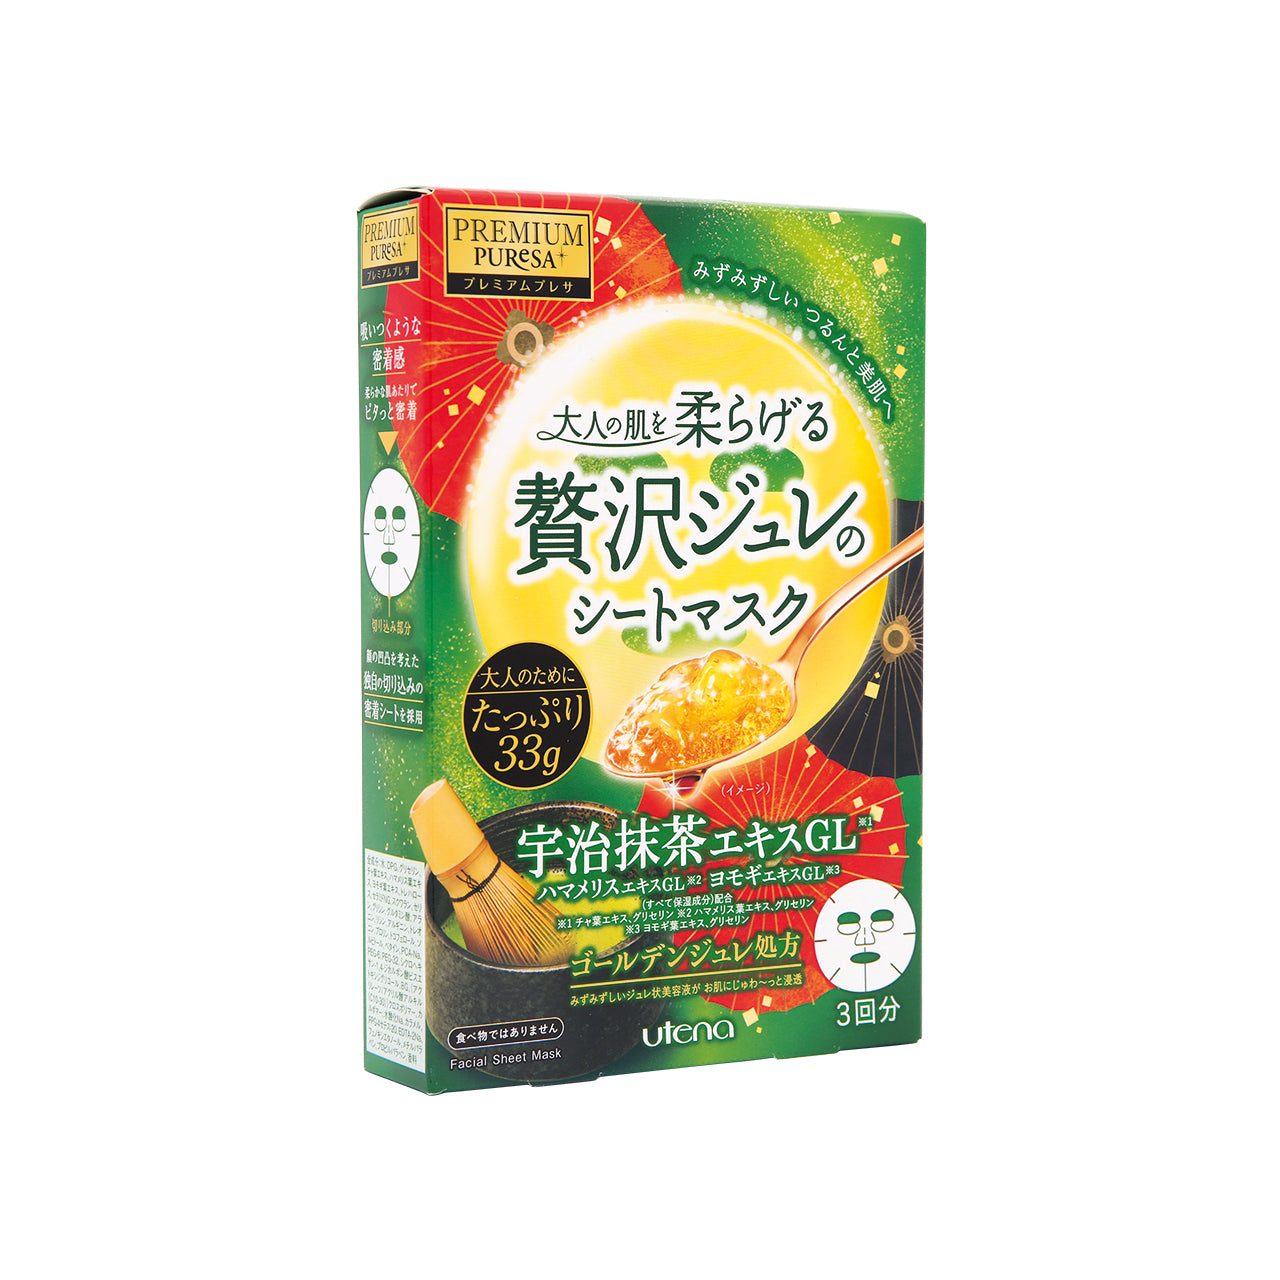 Utena Golden Jelly Mask, Green Tea 3pcs | Sasa Global eShop